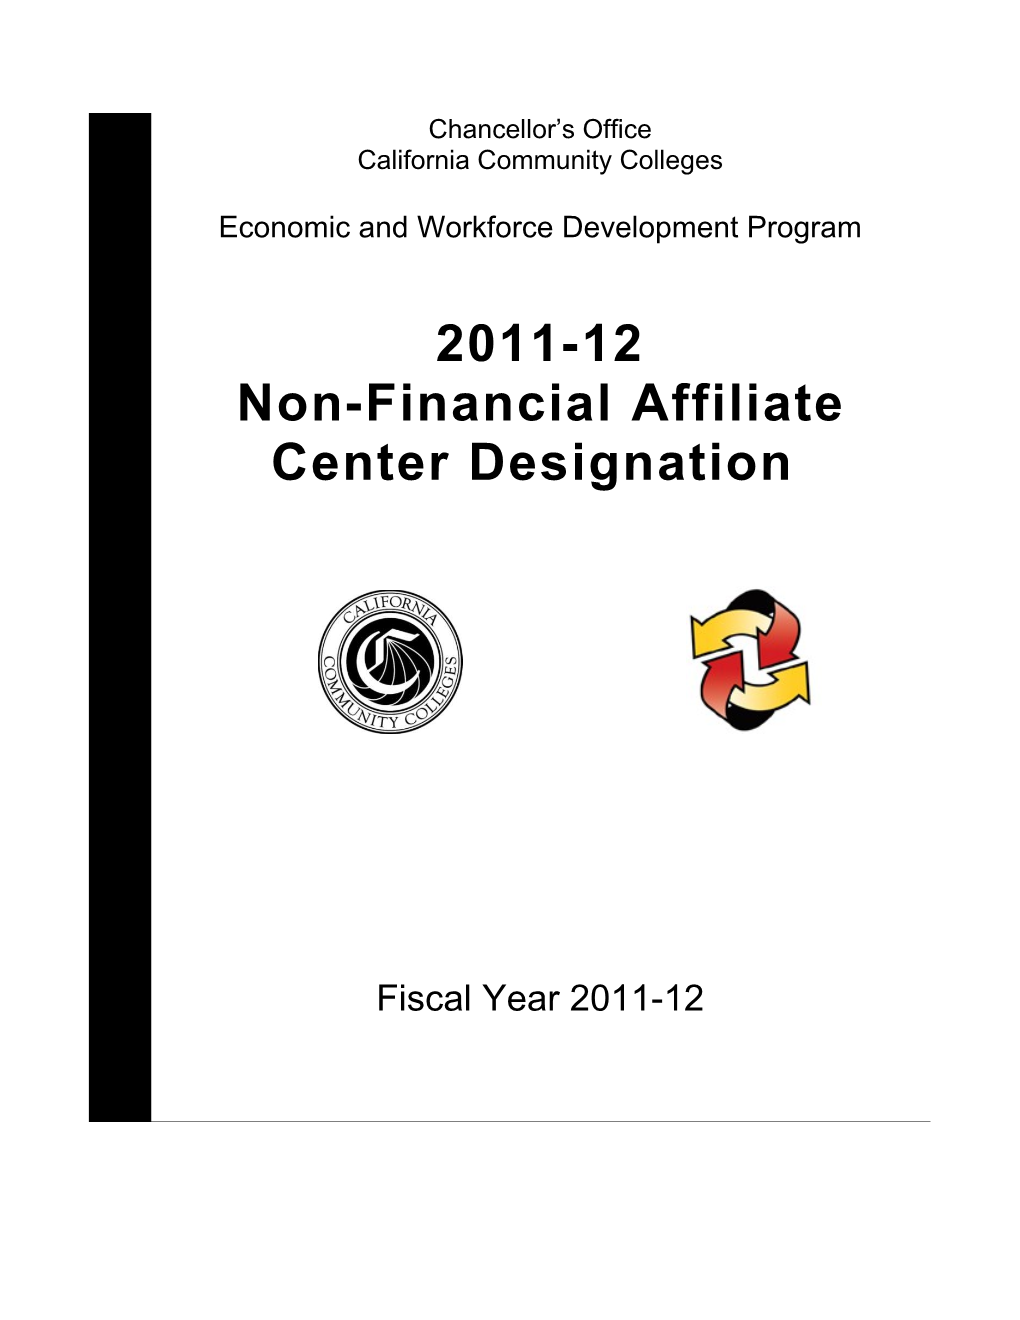 2011-12 Non-Financial Affiliate Center Designation1